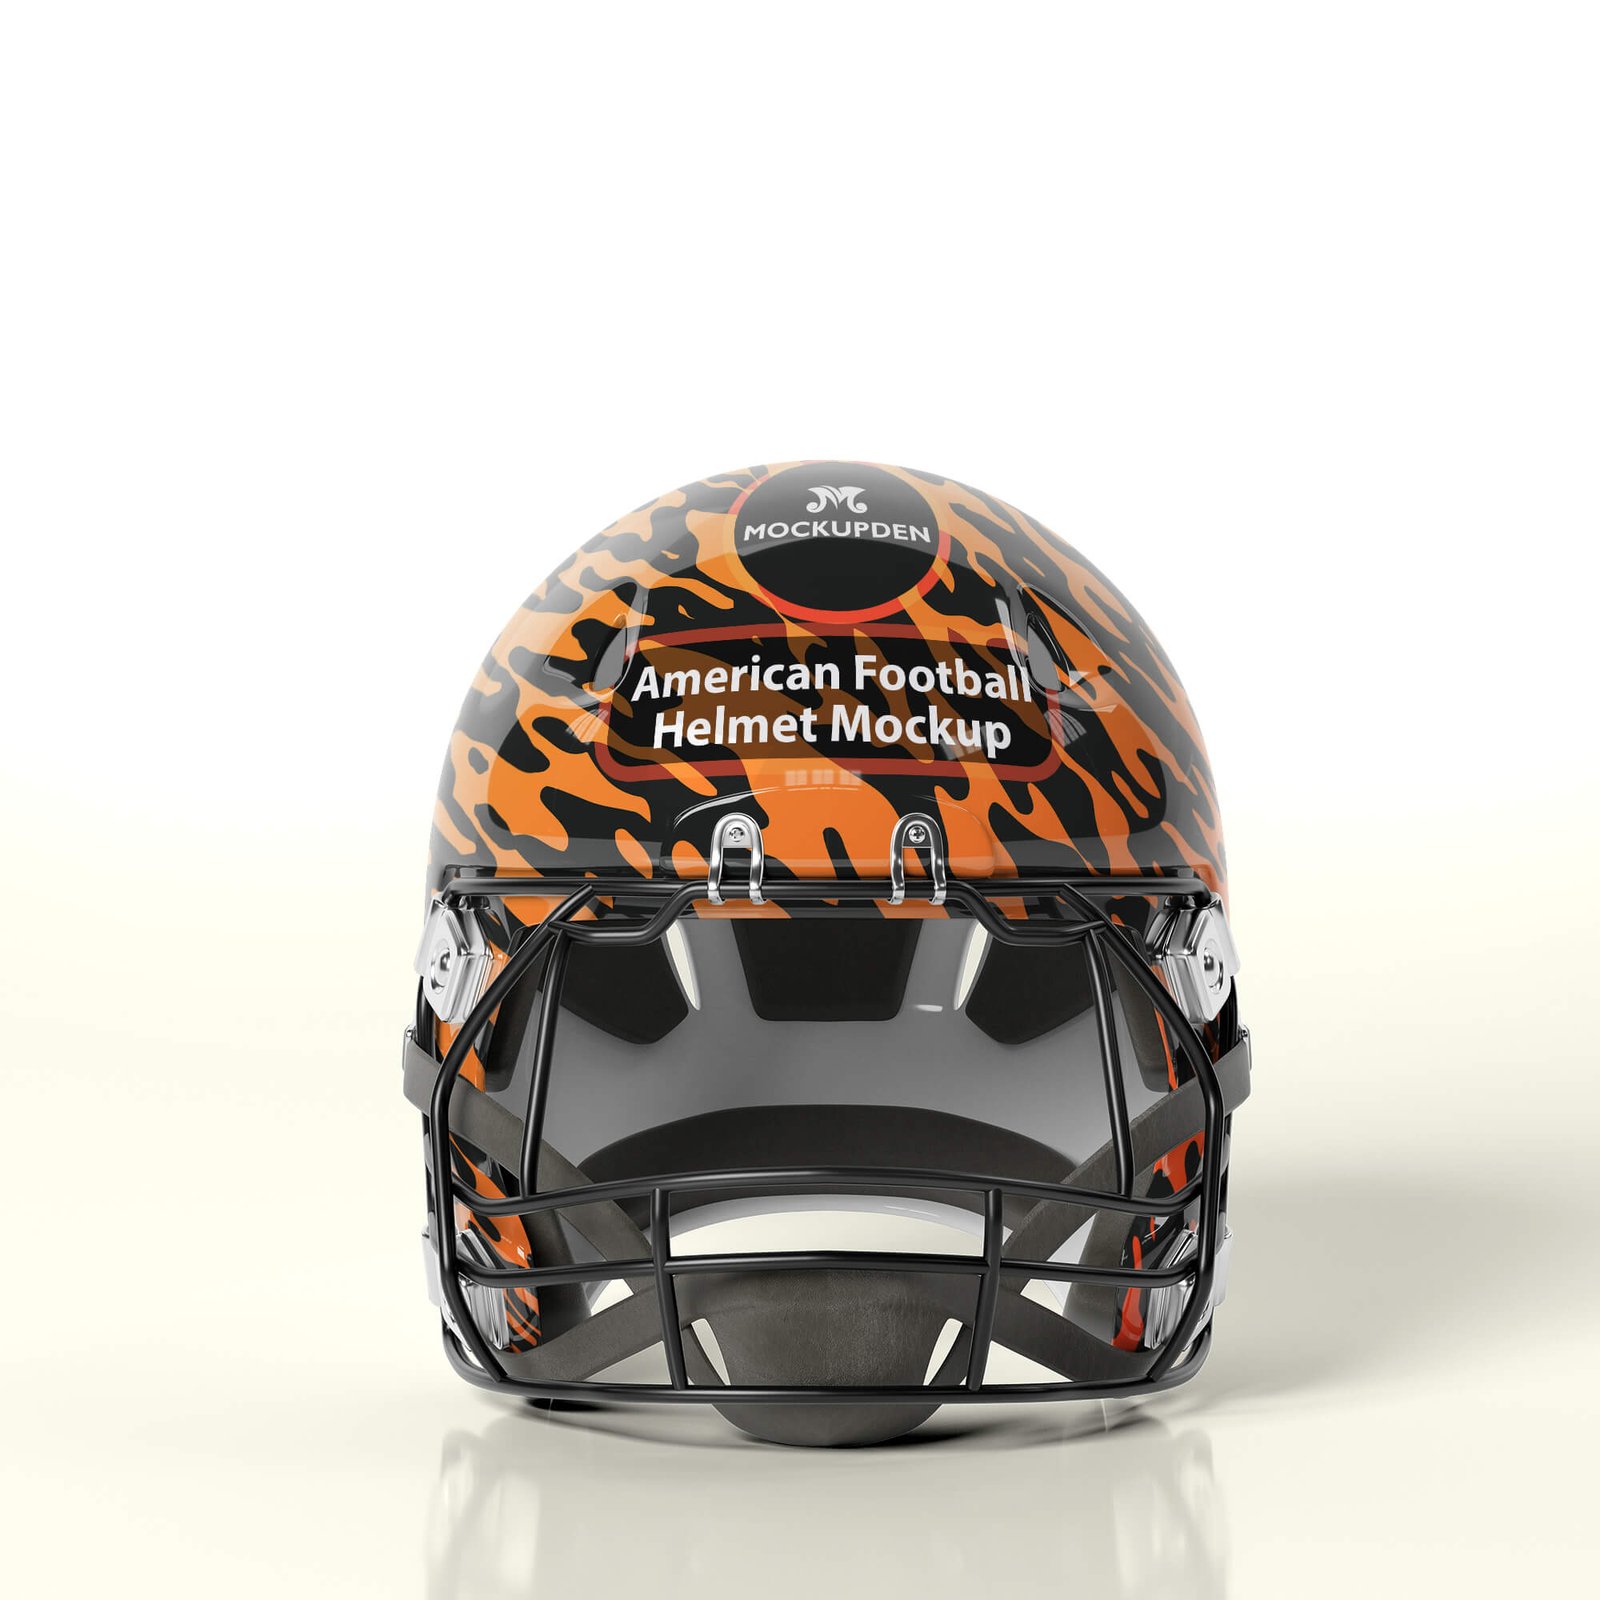 Design Free American Football Helmet Mockup PSD Template